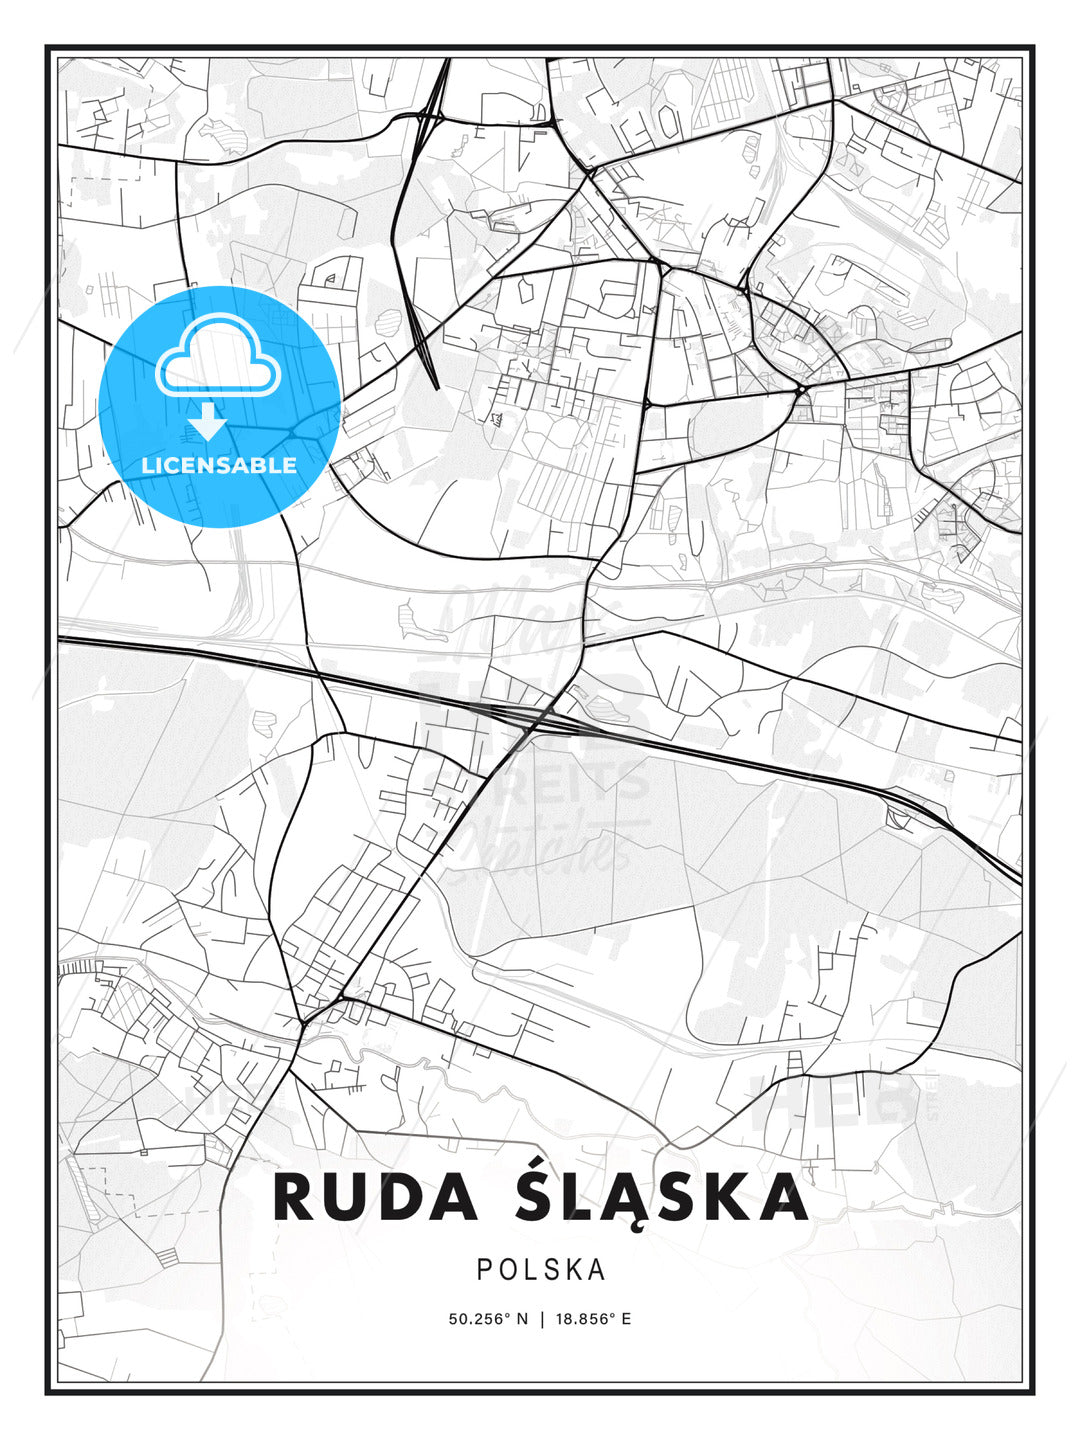 Ruda Śląska, Poland, Modern Print Template in Various Formats - HEBSTREITS Sketches